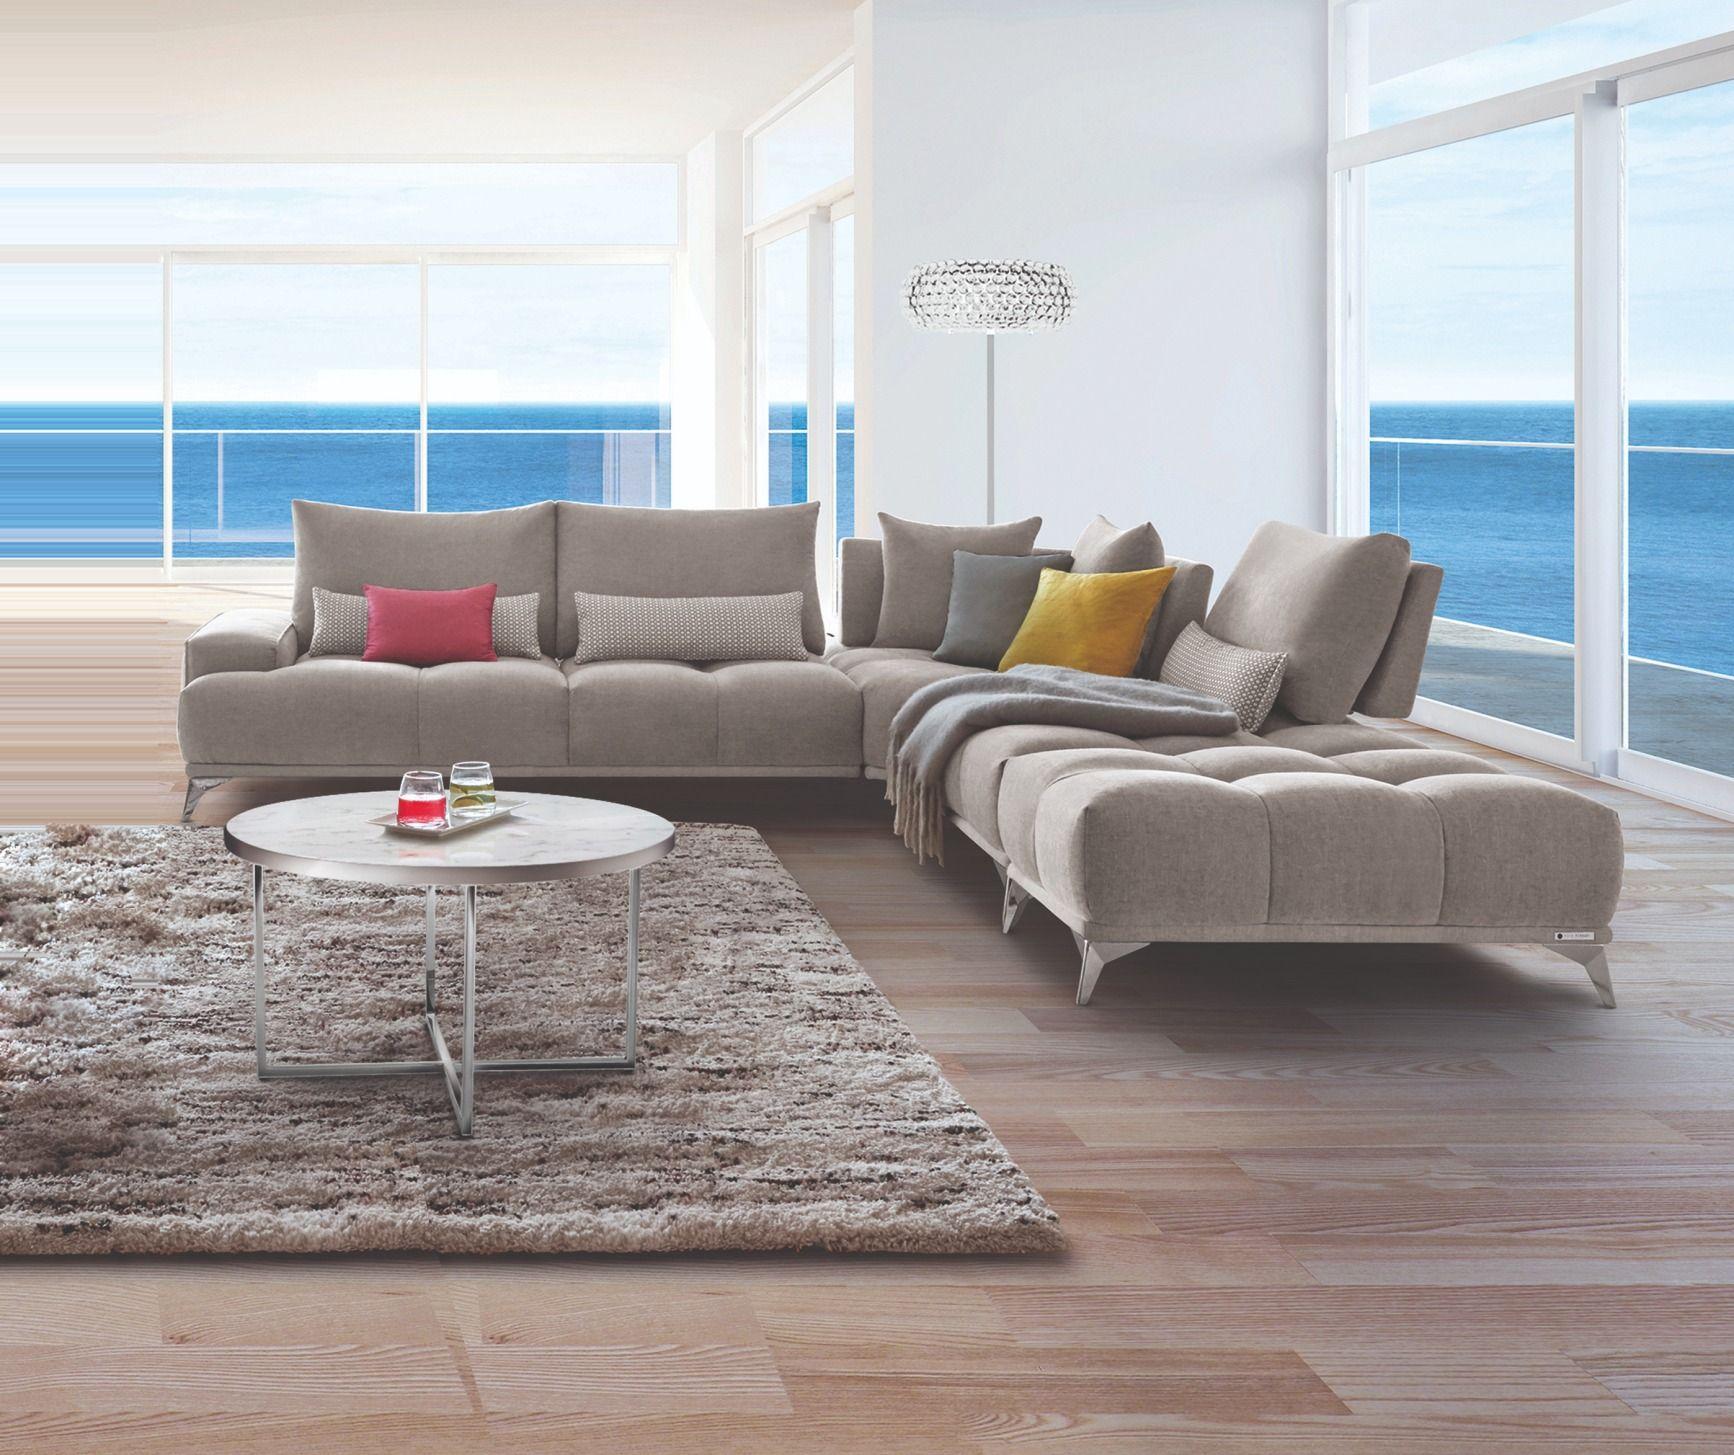 Contemporary, Modern Sectional Sofa VGFTLOFT-GRYZ-SECT VGFTLOFT-GRYZ-SECT in White, Gray Fabric